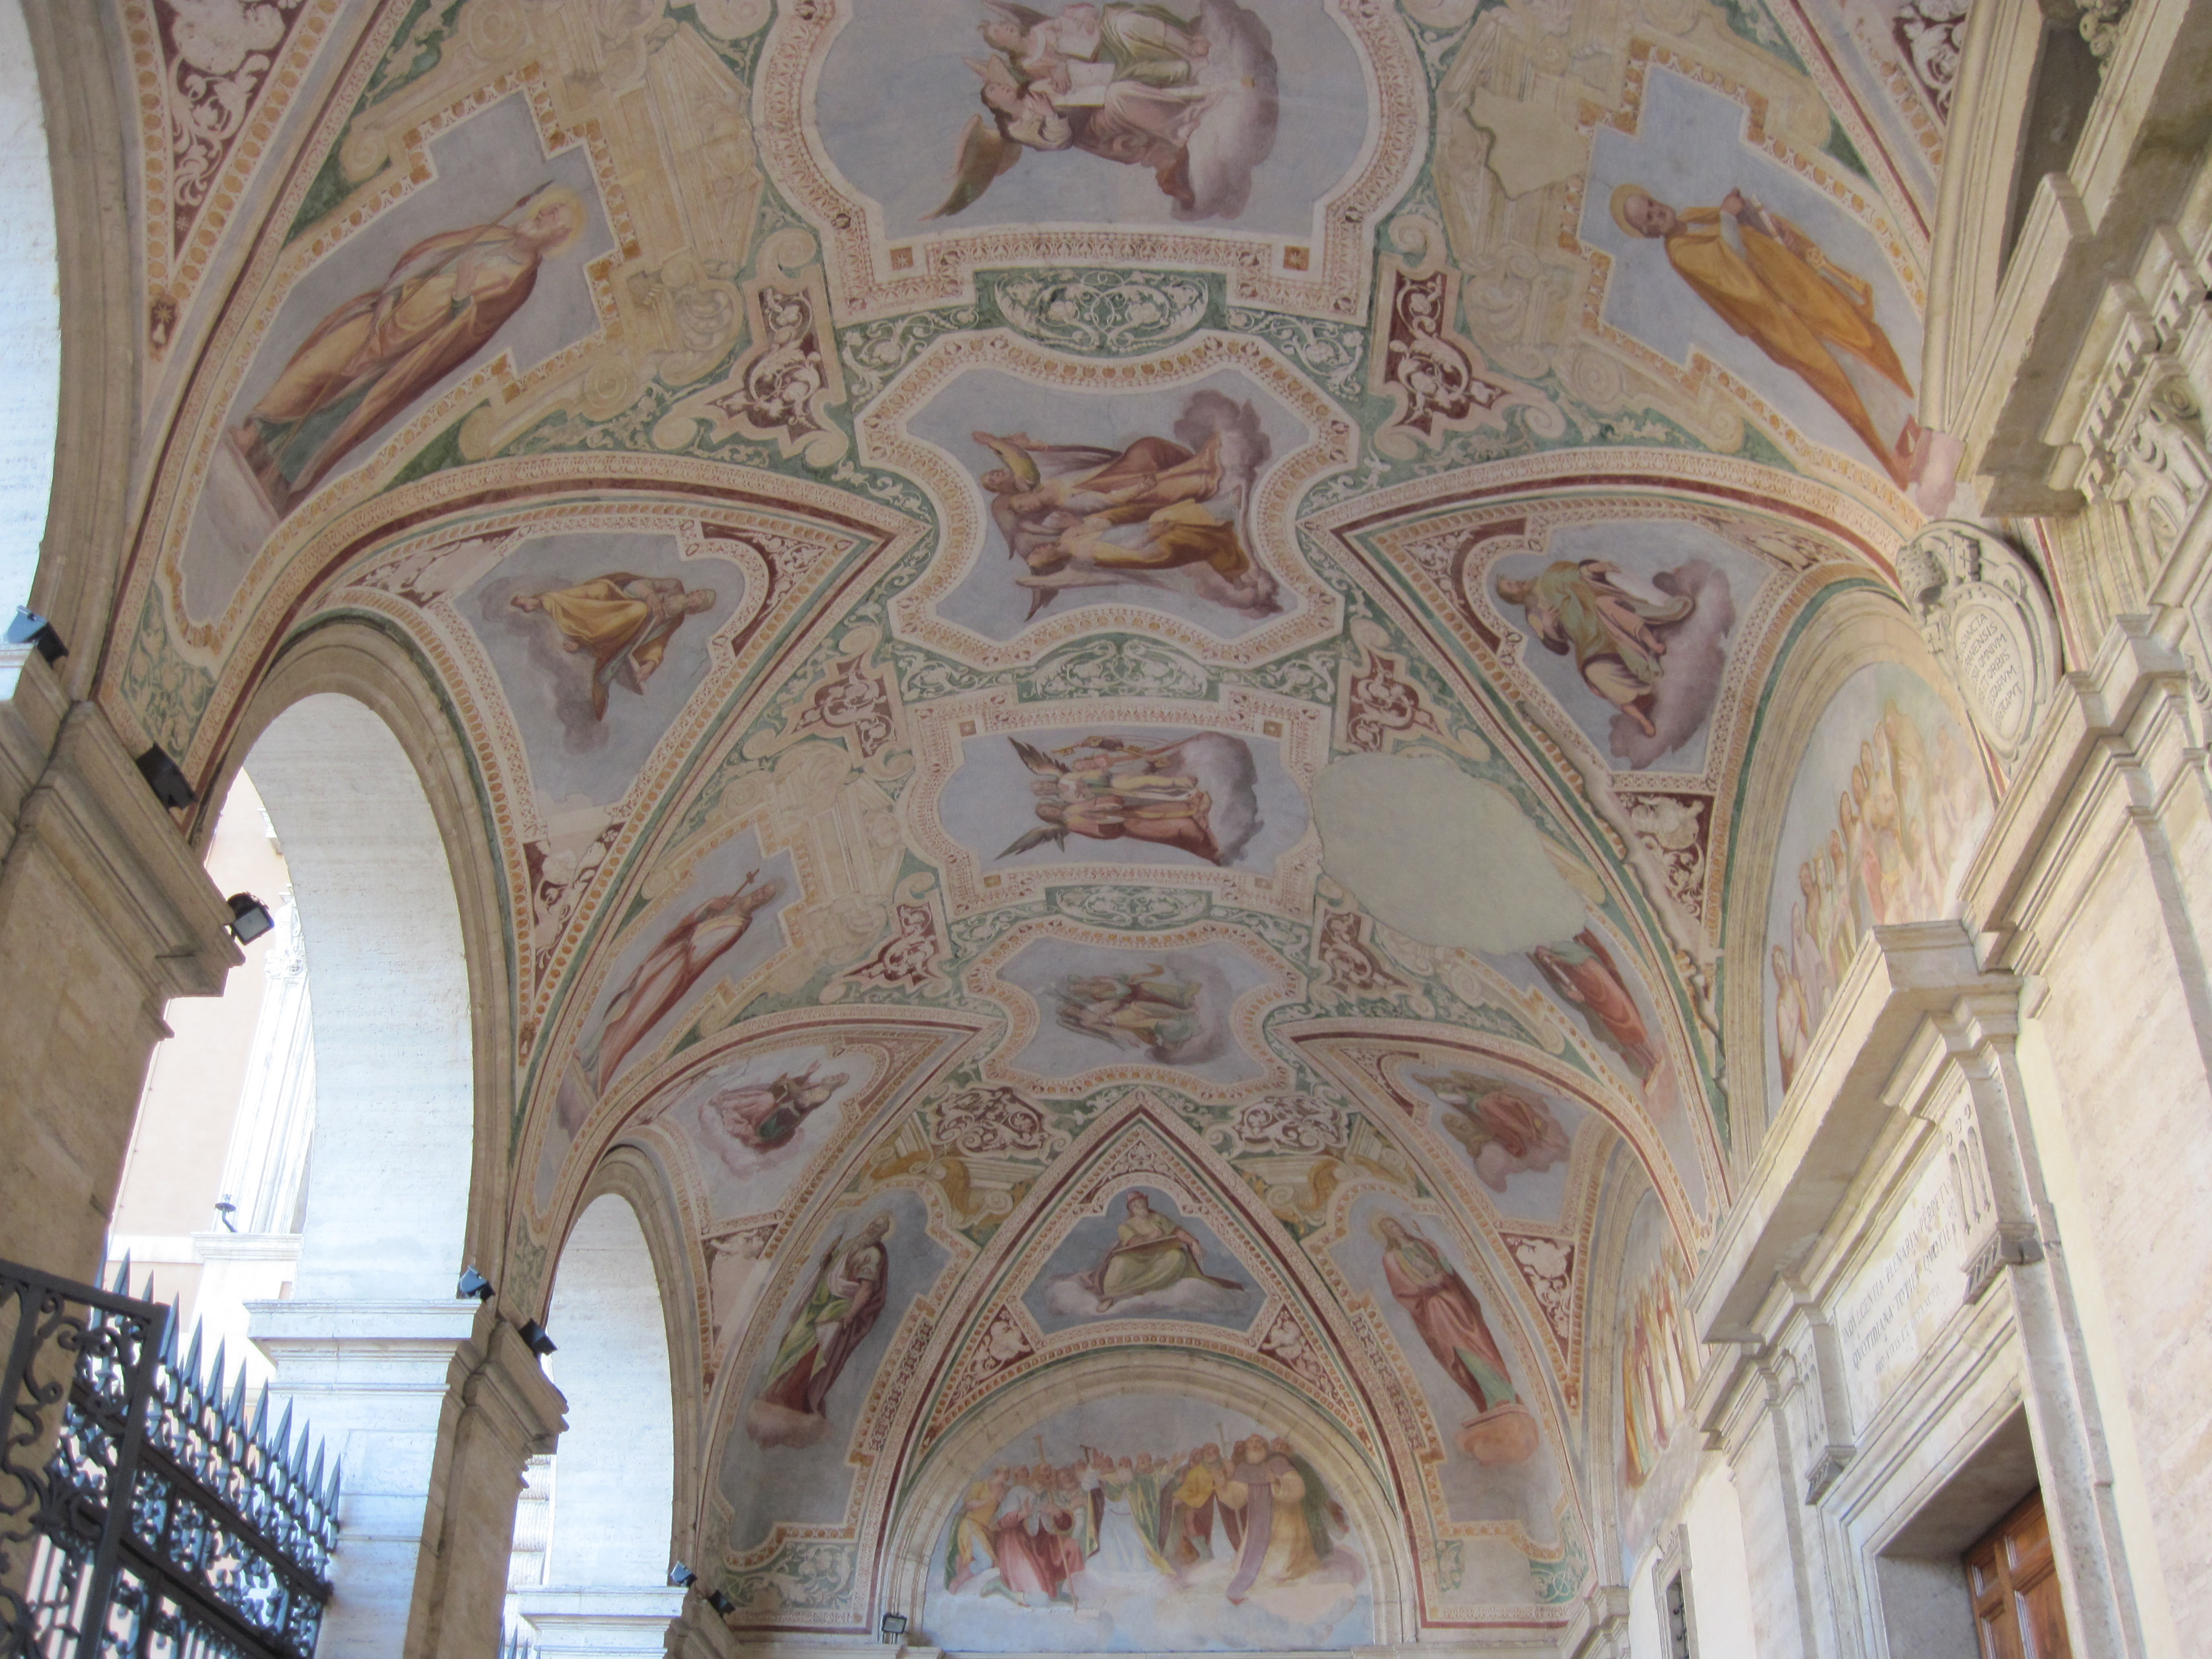 Church ceiling, Art, Artistic, Catholic, Ceiling, HQ Photo